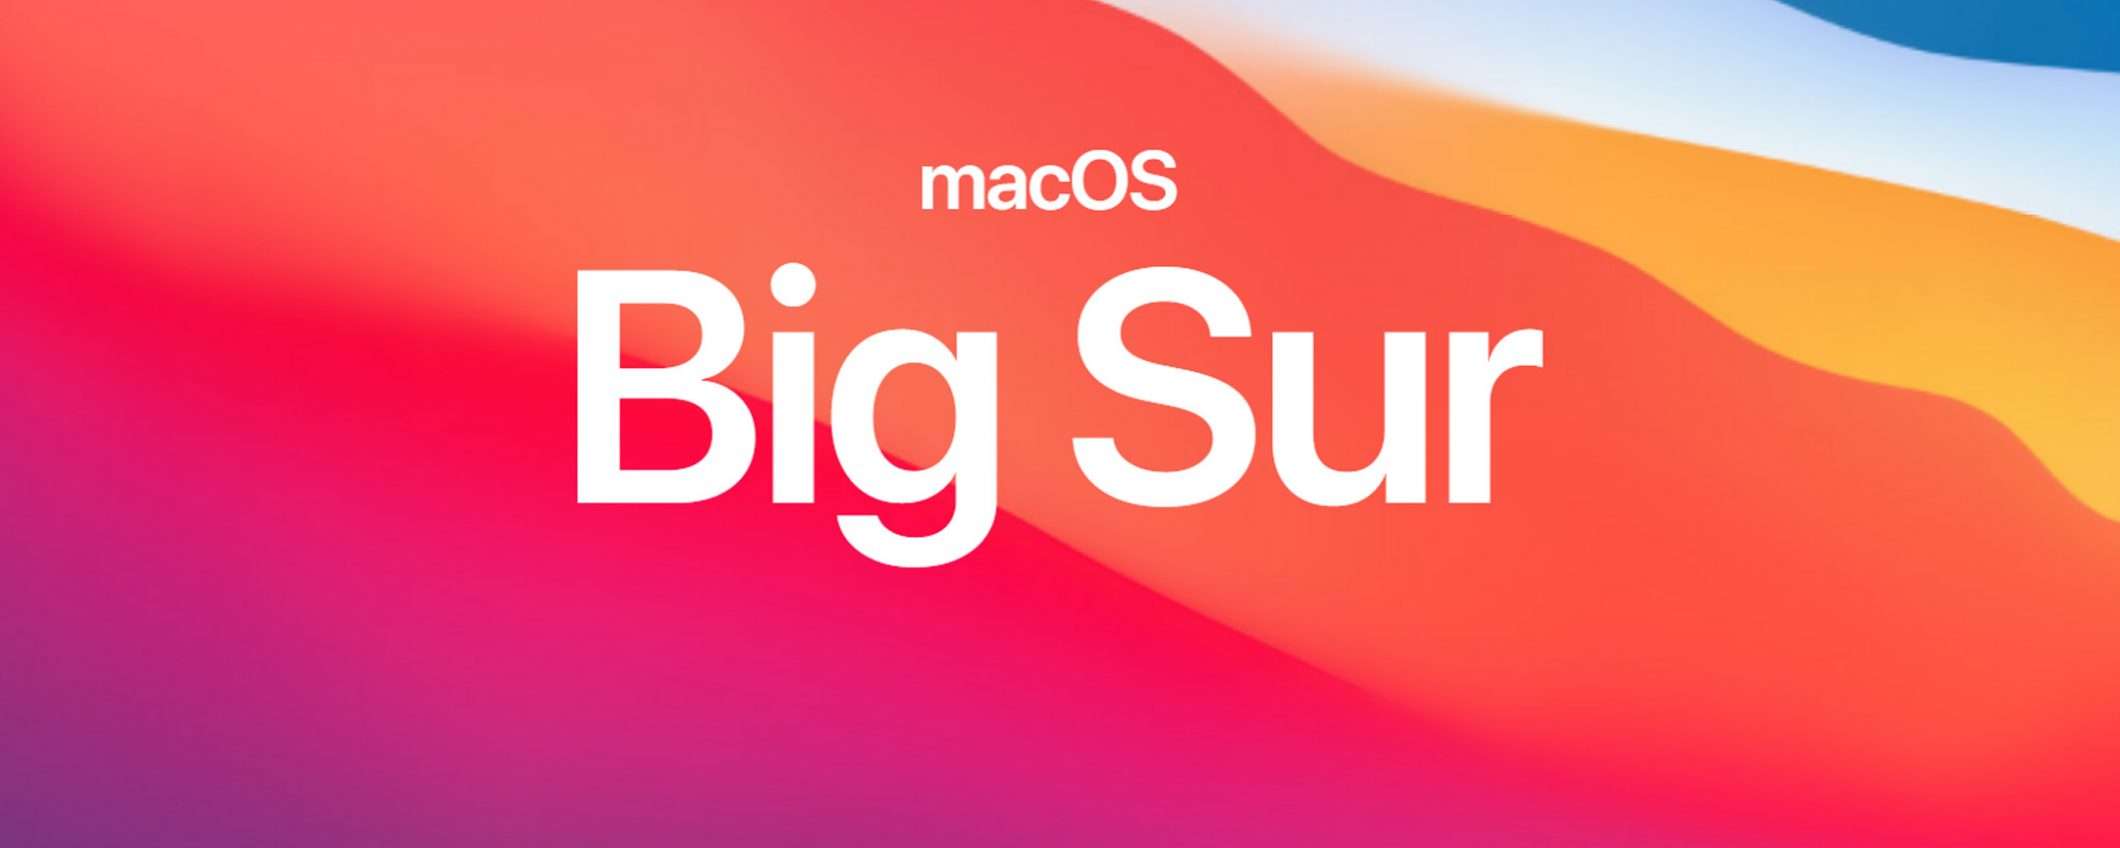 Apple rilascia la prima beta di macOS Big Sur 11.3